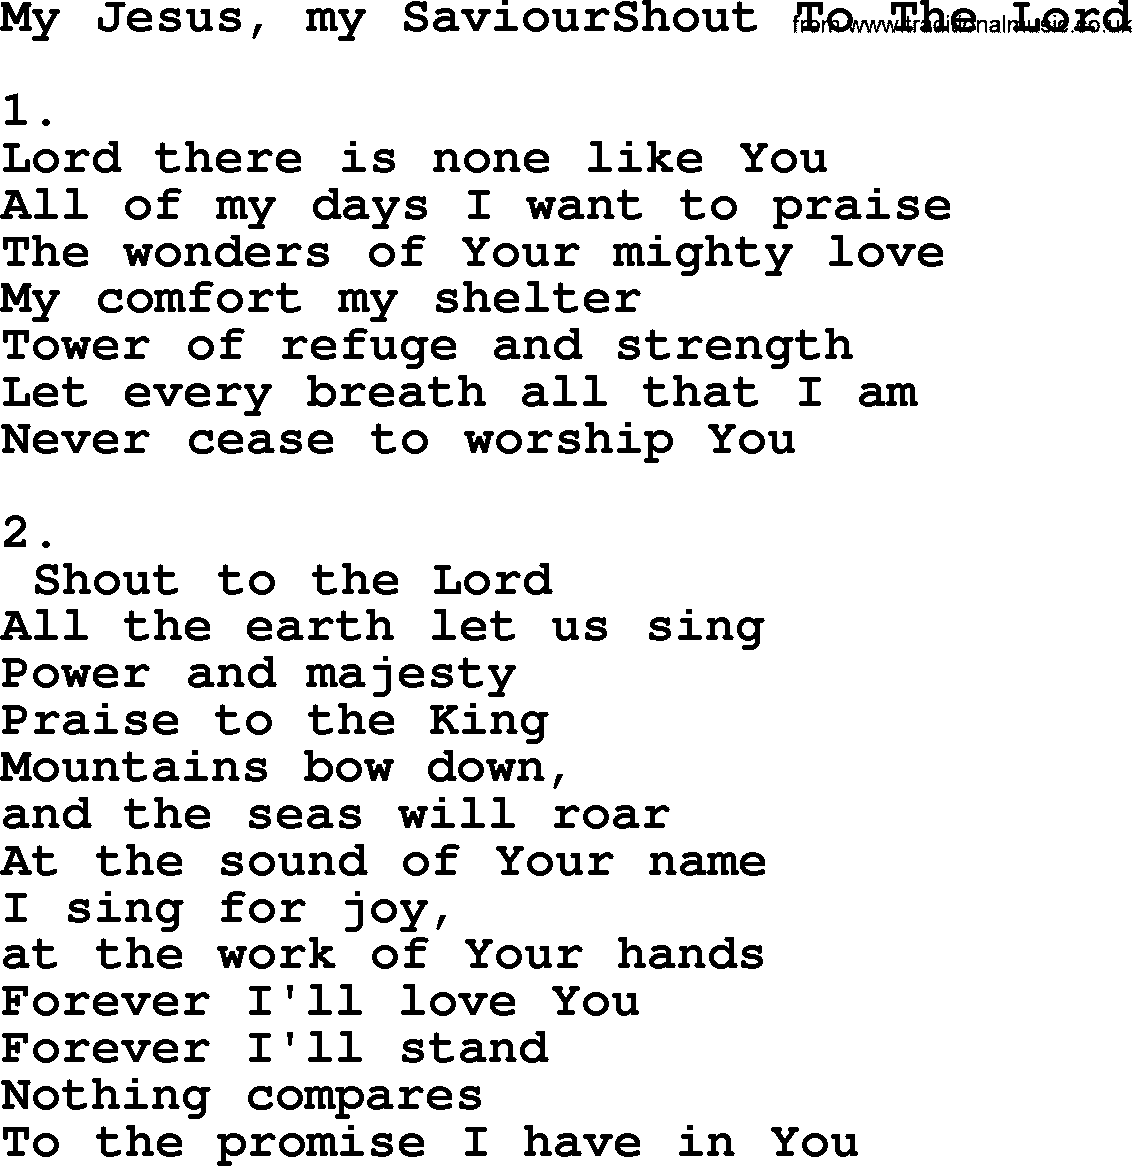 Apostolic & Pentecostal Hymns and Songs, Hymn: My Jesus, my SaviourShout To The Lord lyrics and PDF